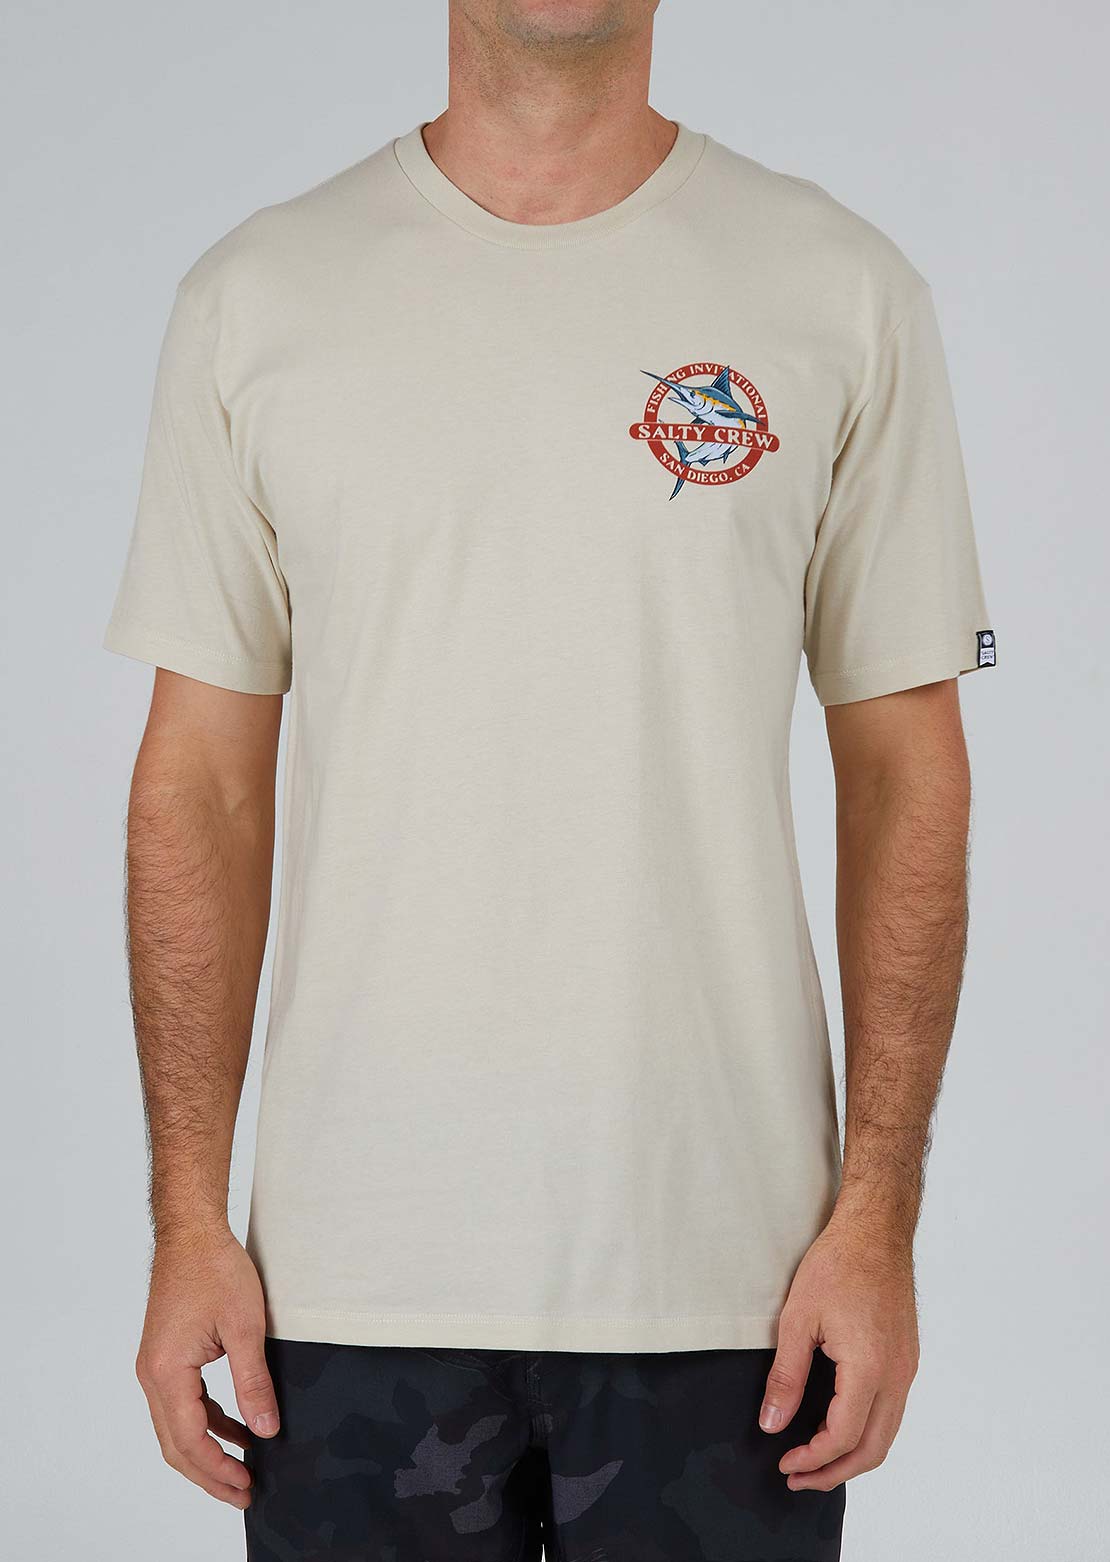 Salty Crew Men's Interclub Premium T-Shirt - PRFO Sports